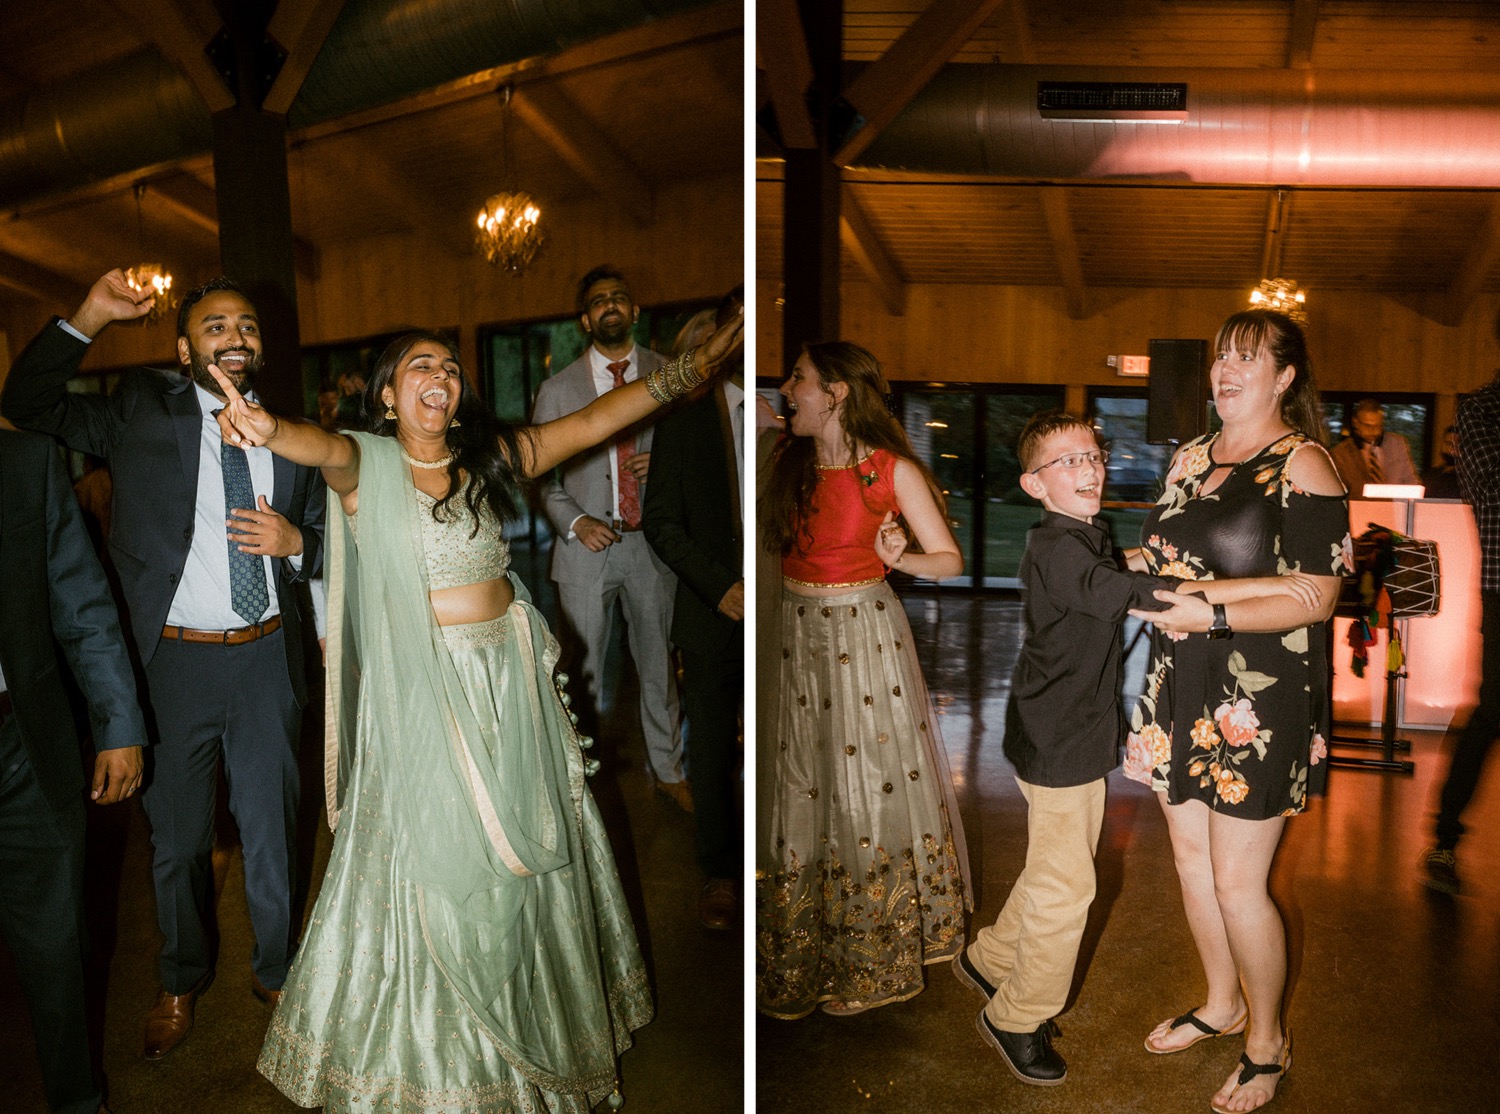 guests dancing celebrating at wedding reception